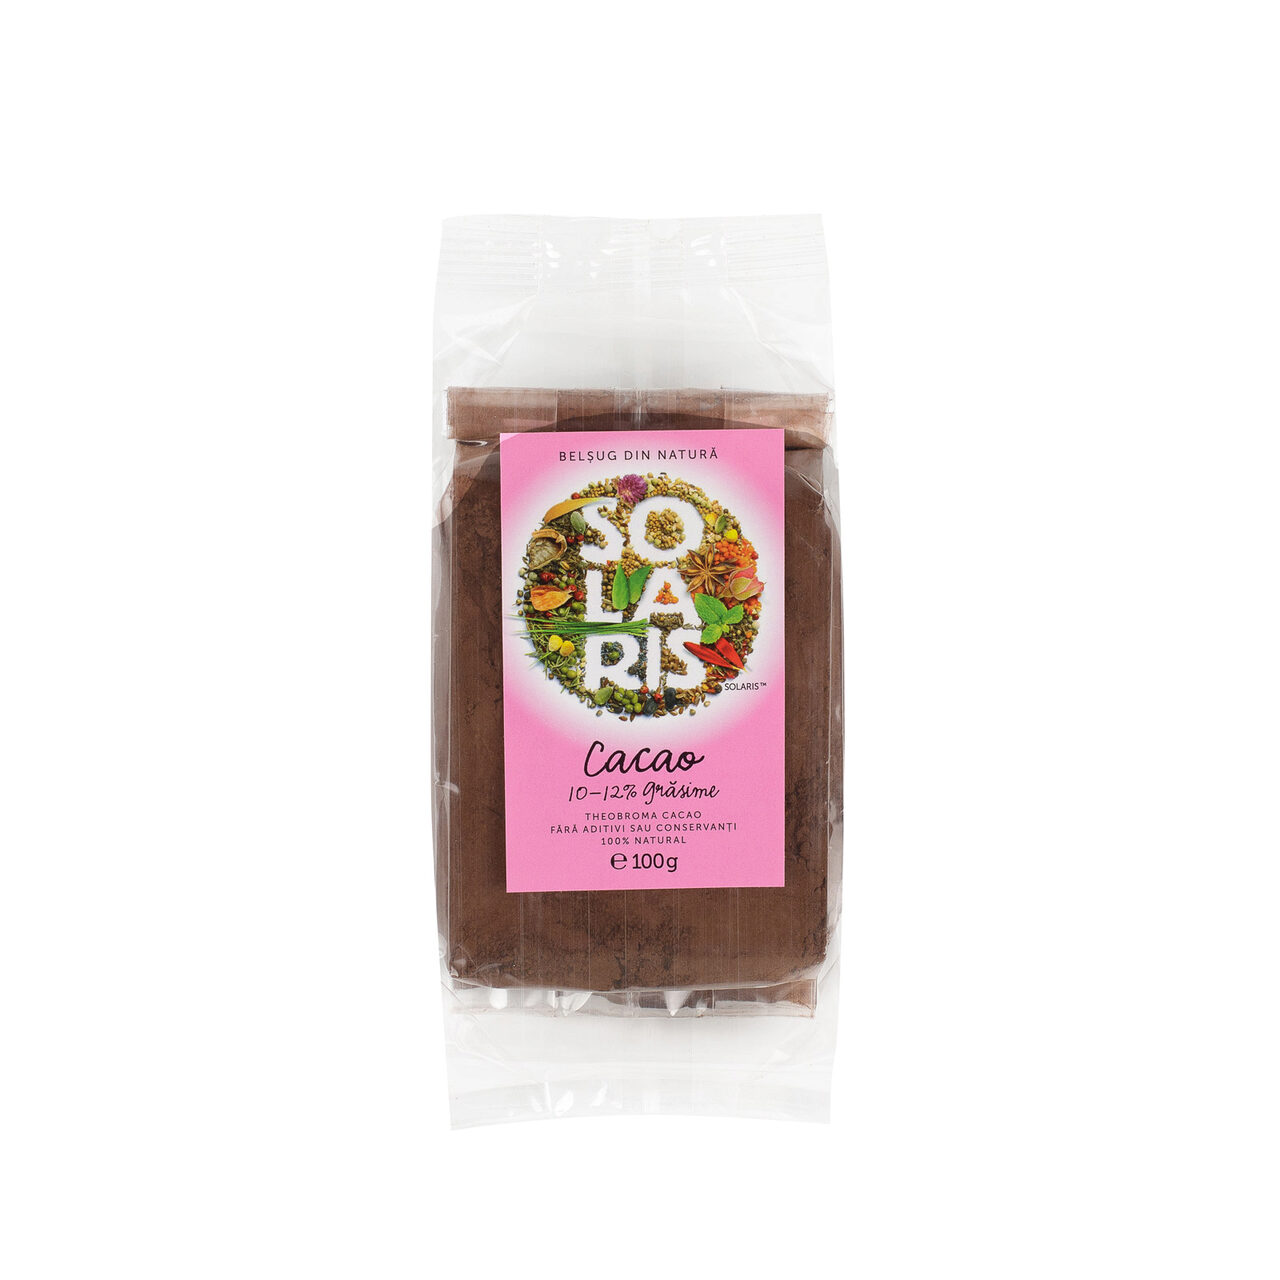 CEAI SI CAFEA - Cacao pudră 10-12% grăsime 100g Solaris, sinapis.ro